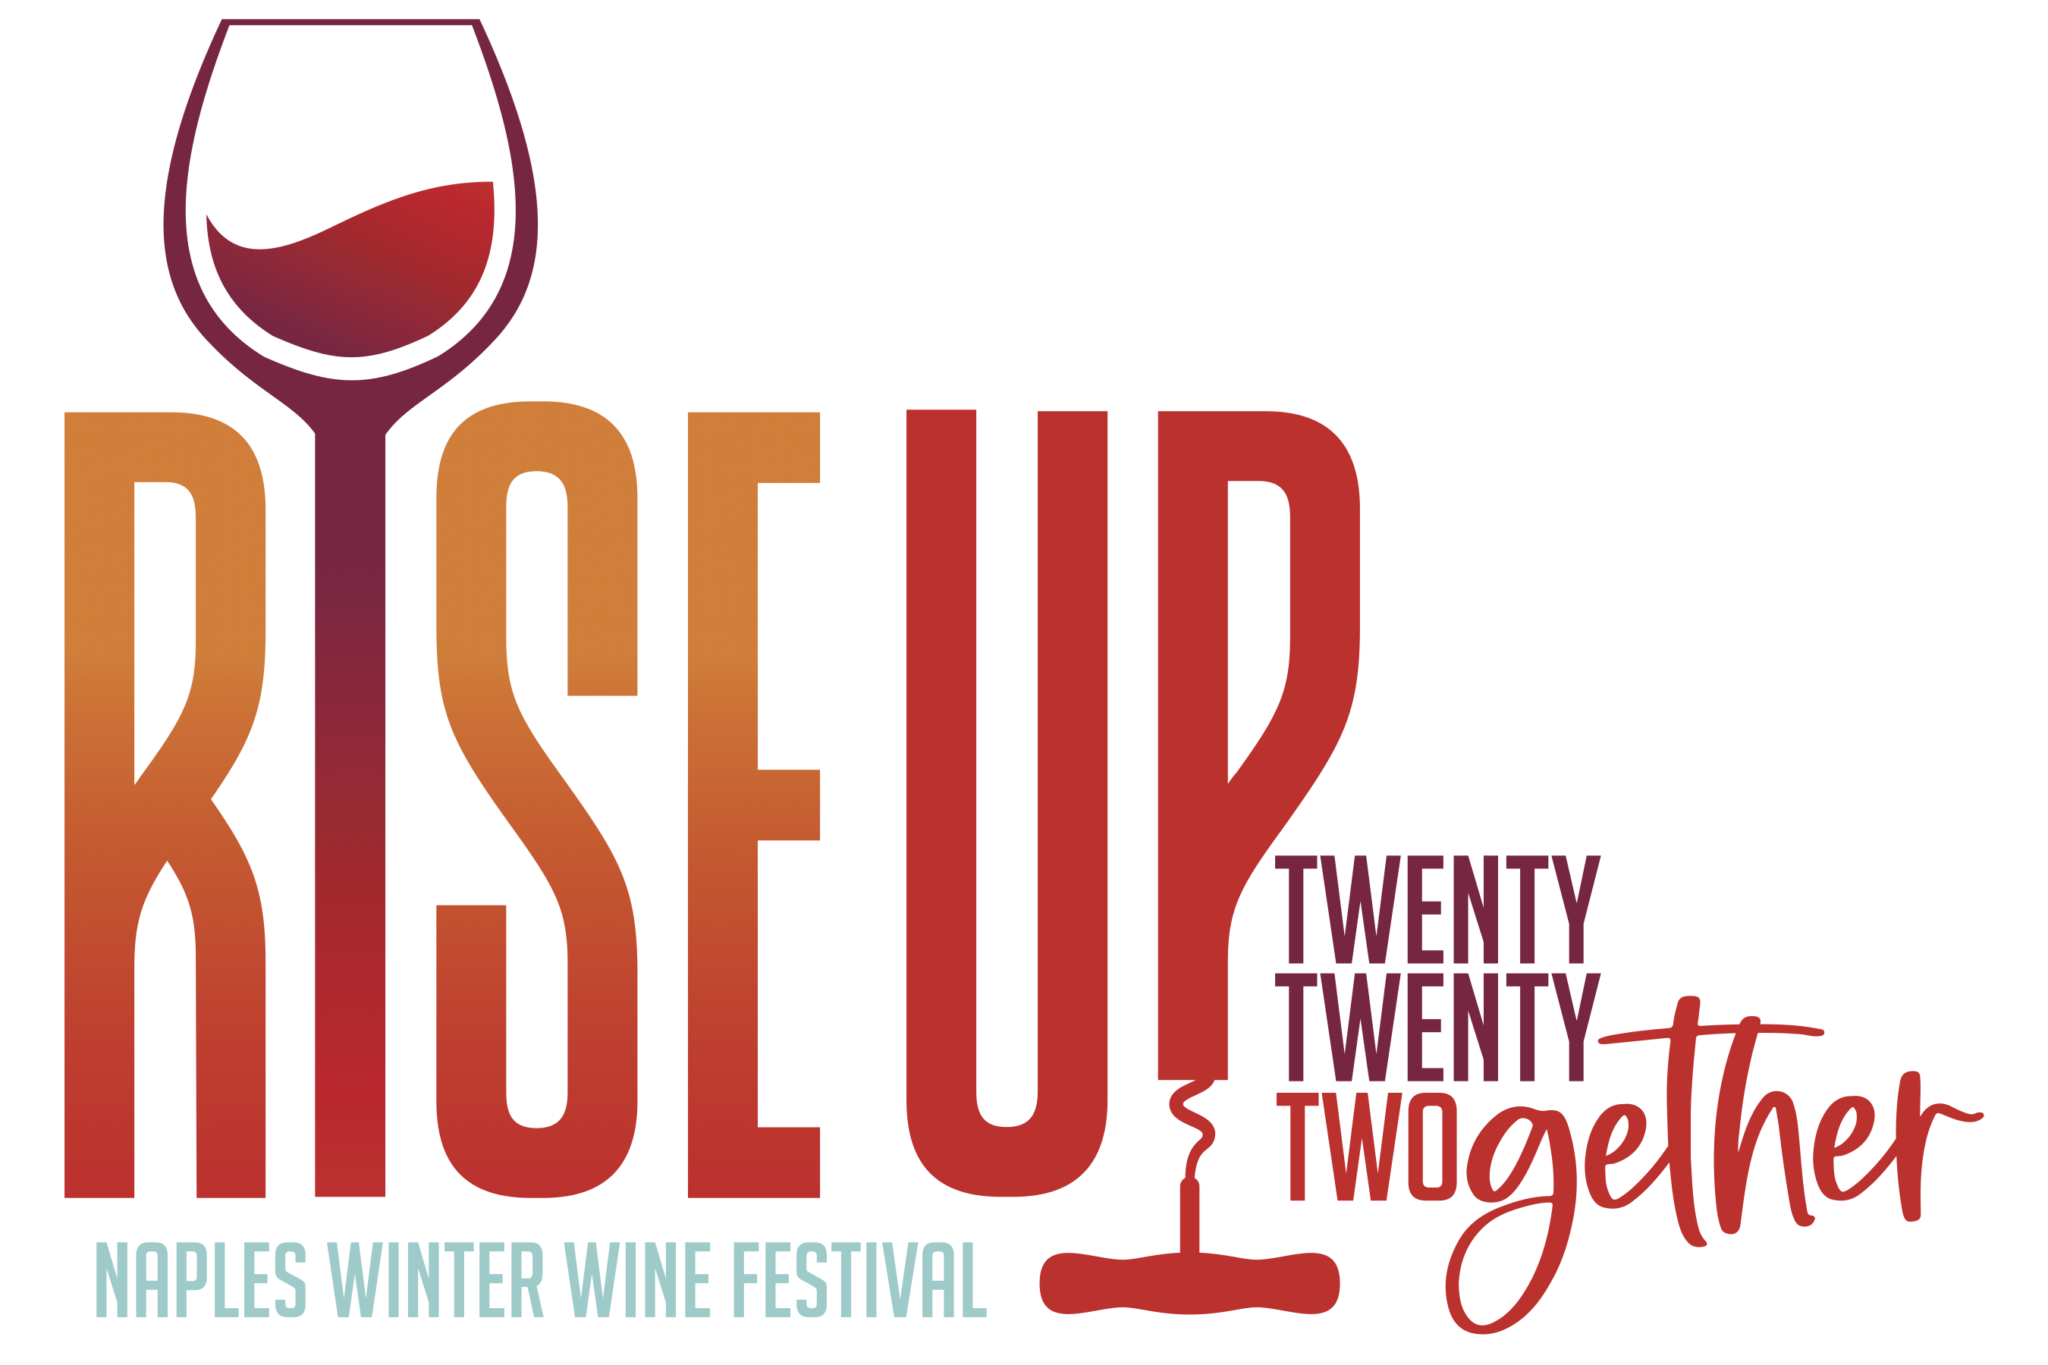 Naples Winter Wine Festivals Live Event Returns January 2022